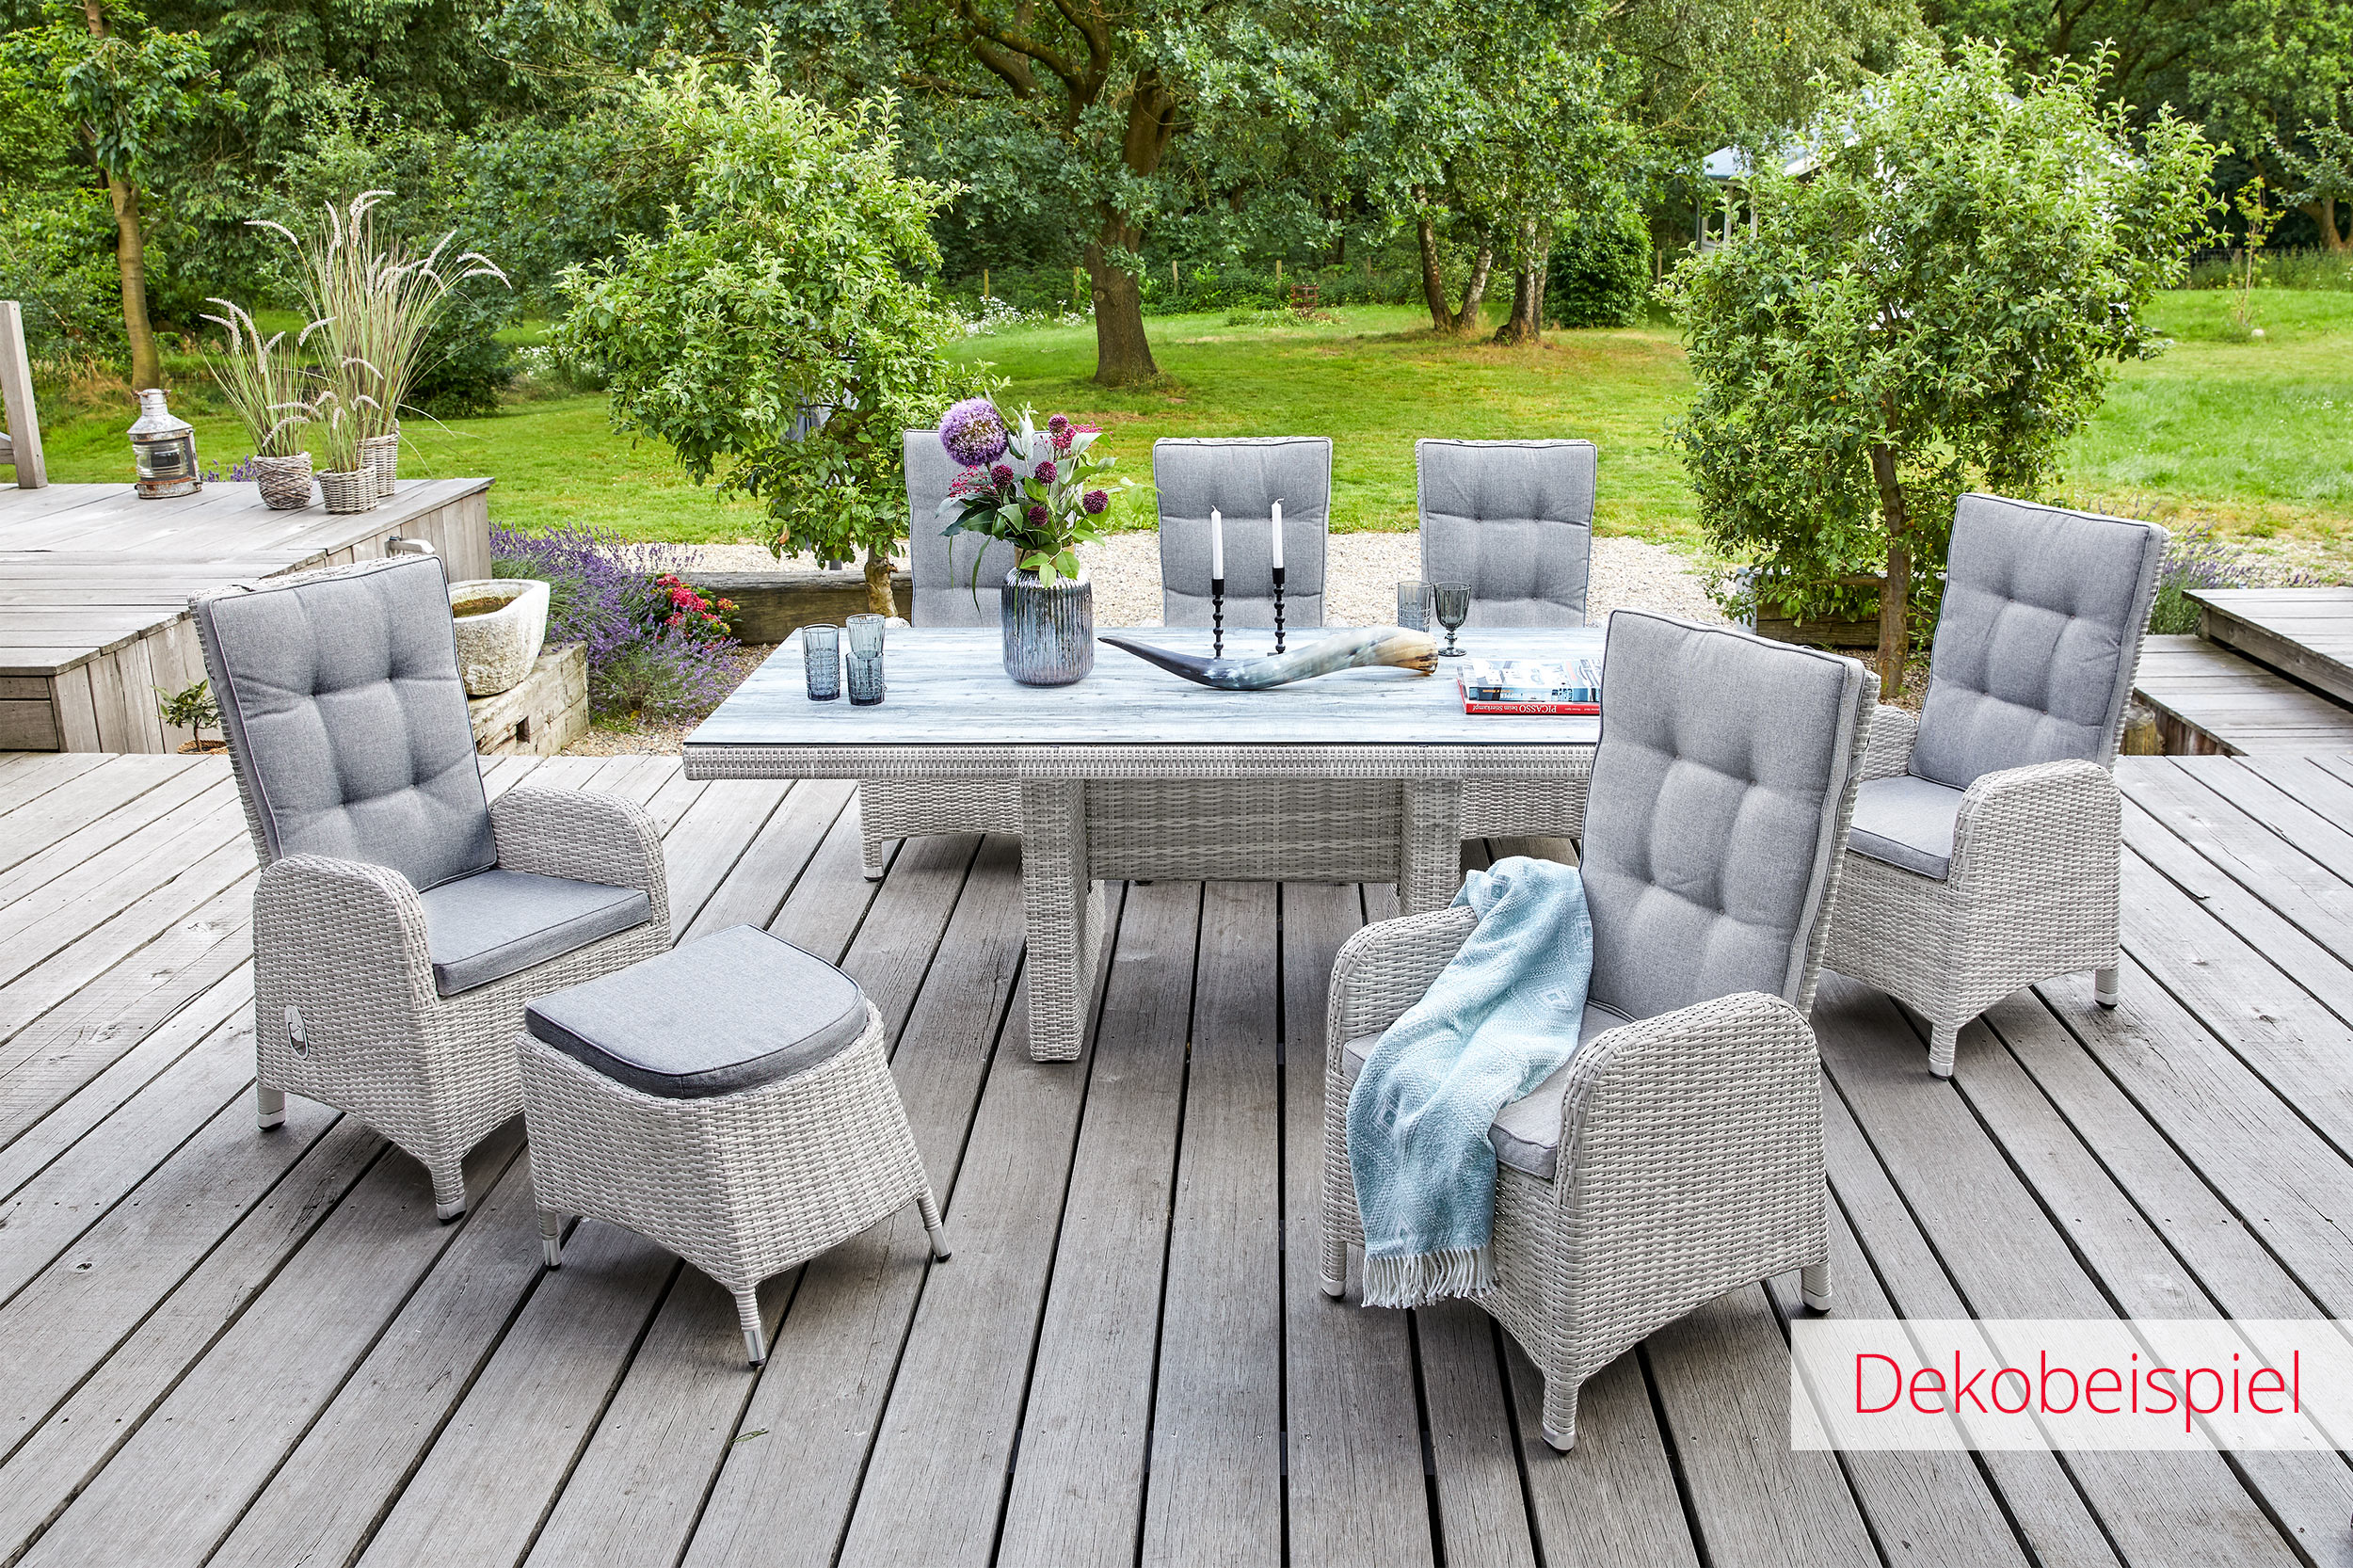 LC Garden »Nizza« Dining 6er Set Positionsstuhl Gartenstuhl weiß-grau Polyrattan inkl. Polster